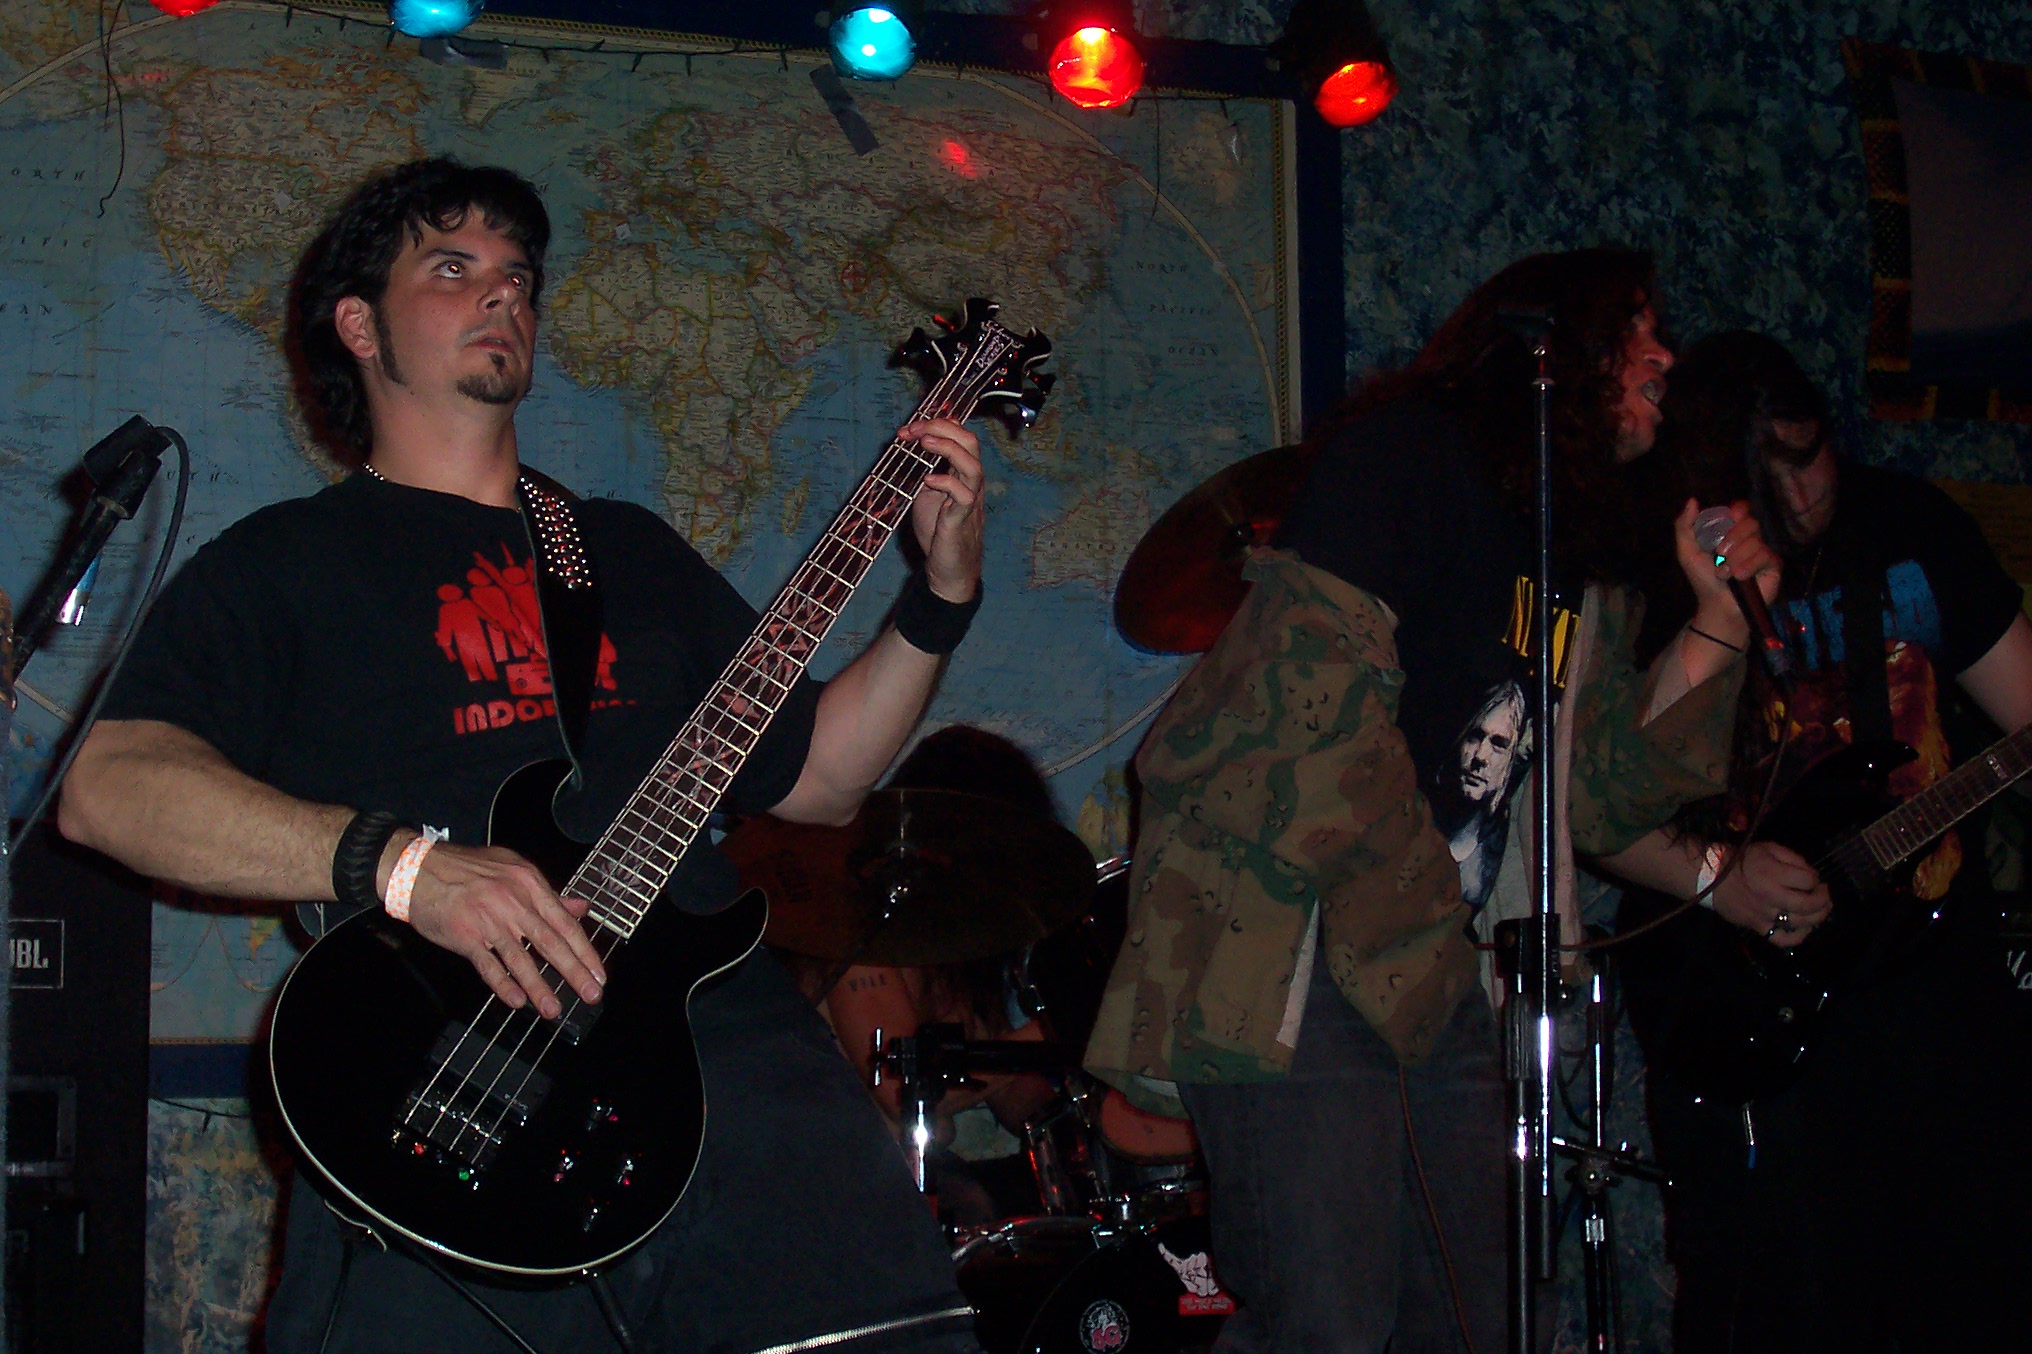 Osiris Rising in concert - Surf Cafe Boca Raton, FL - November 2005